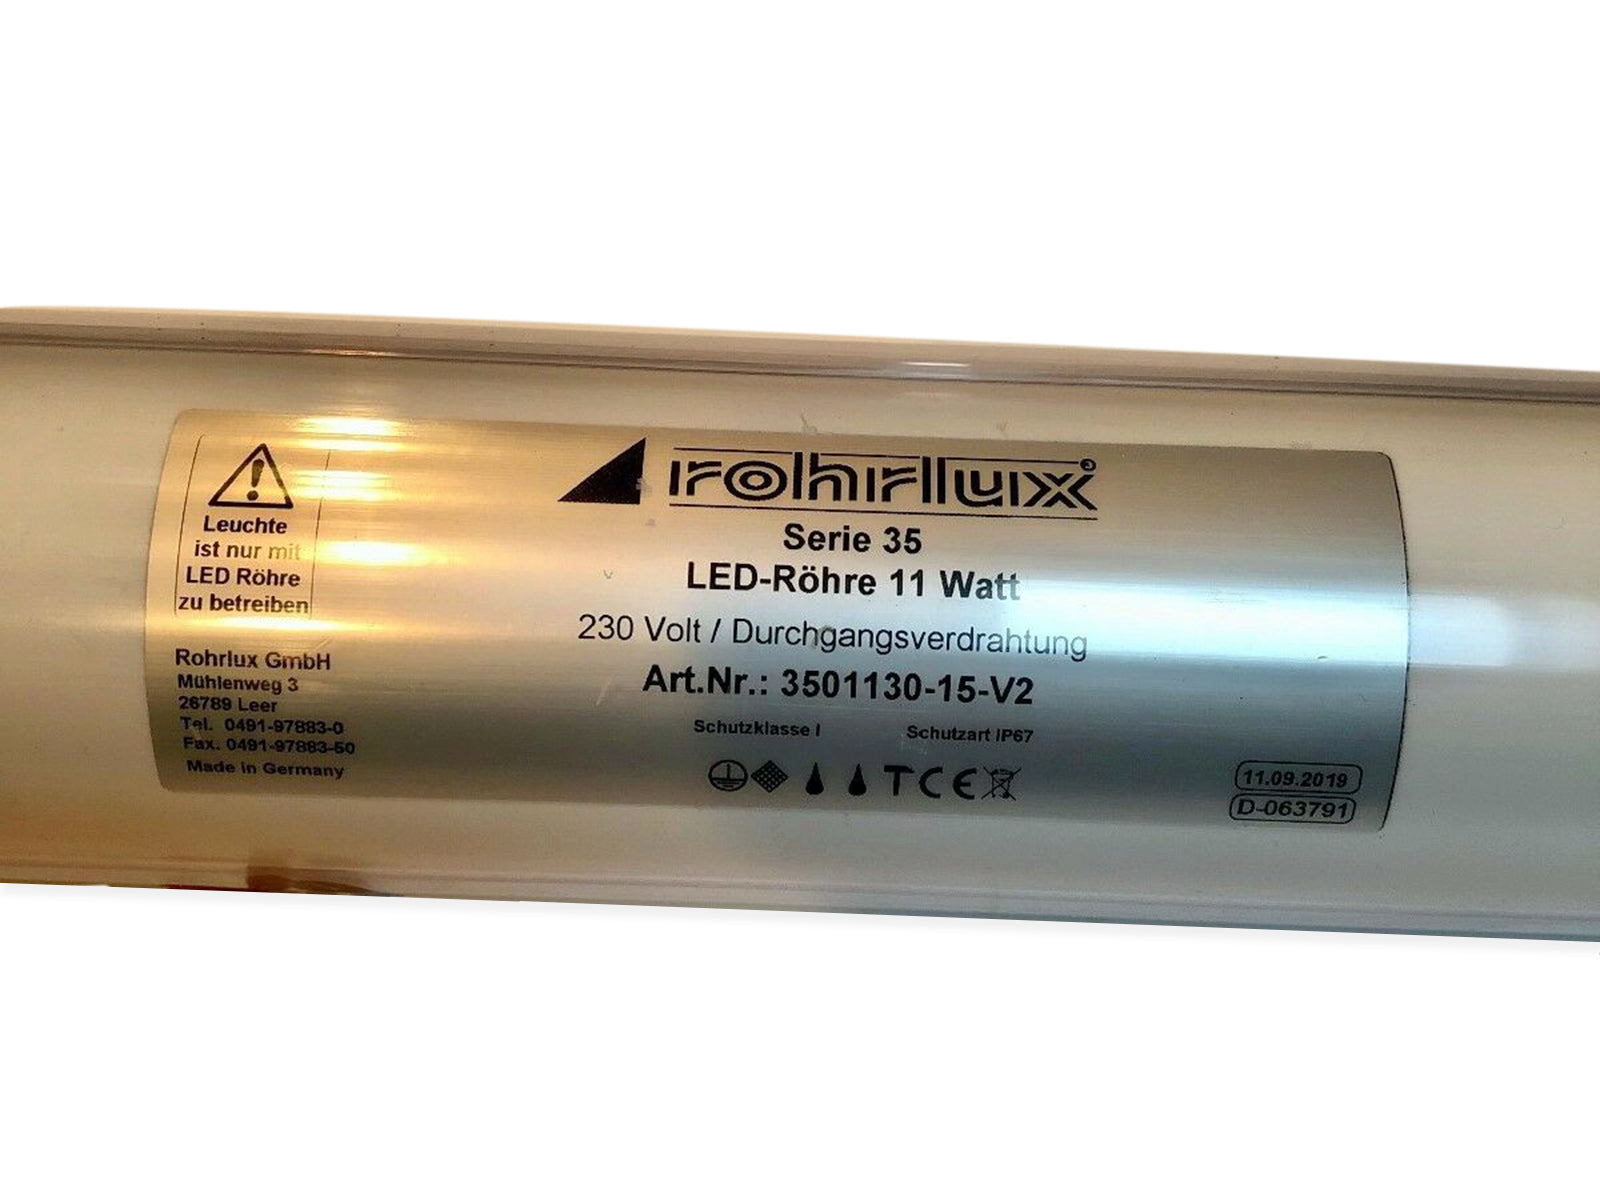 Rohrlux lamp 35011130-15-V2 230V - ppdistributors